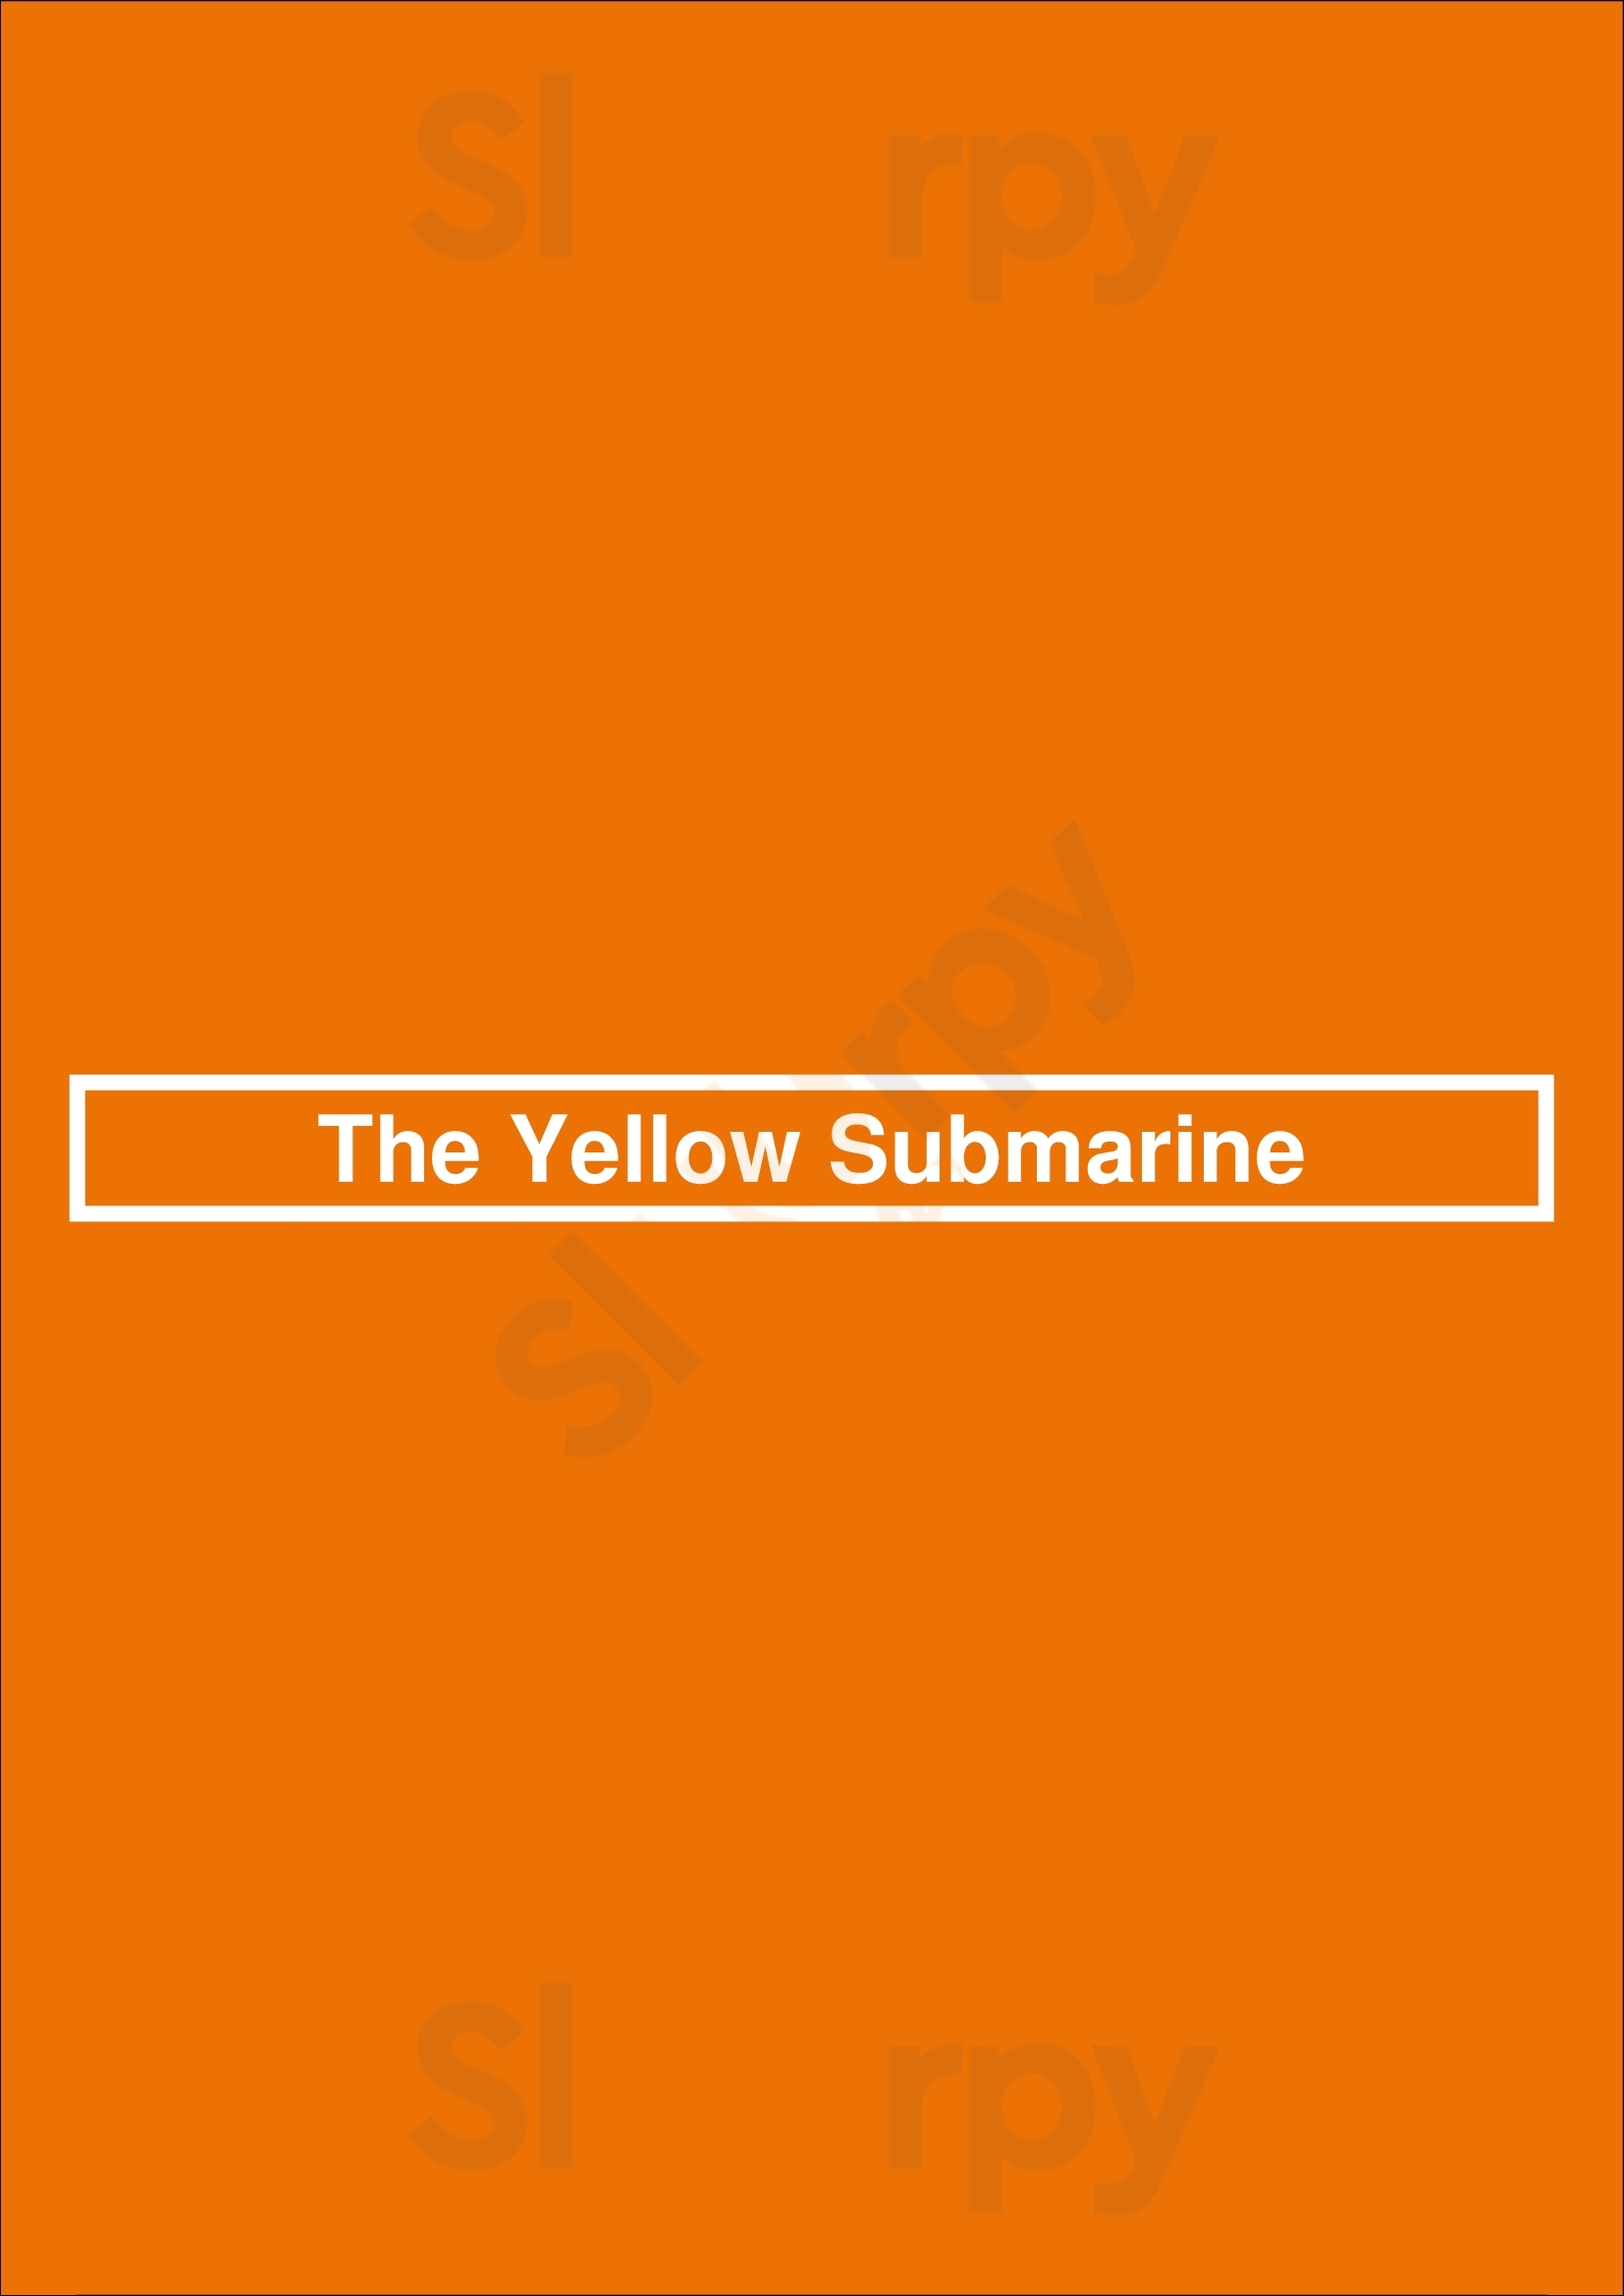 The Yellow Submarine Dallas Menu - 1